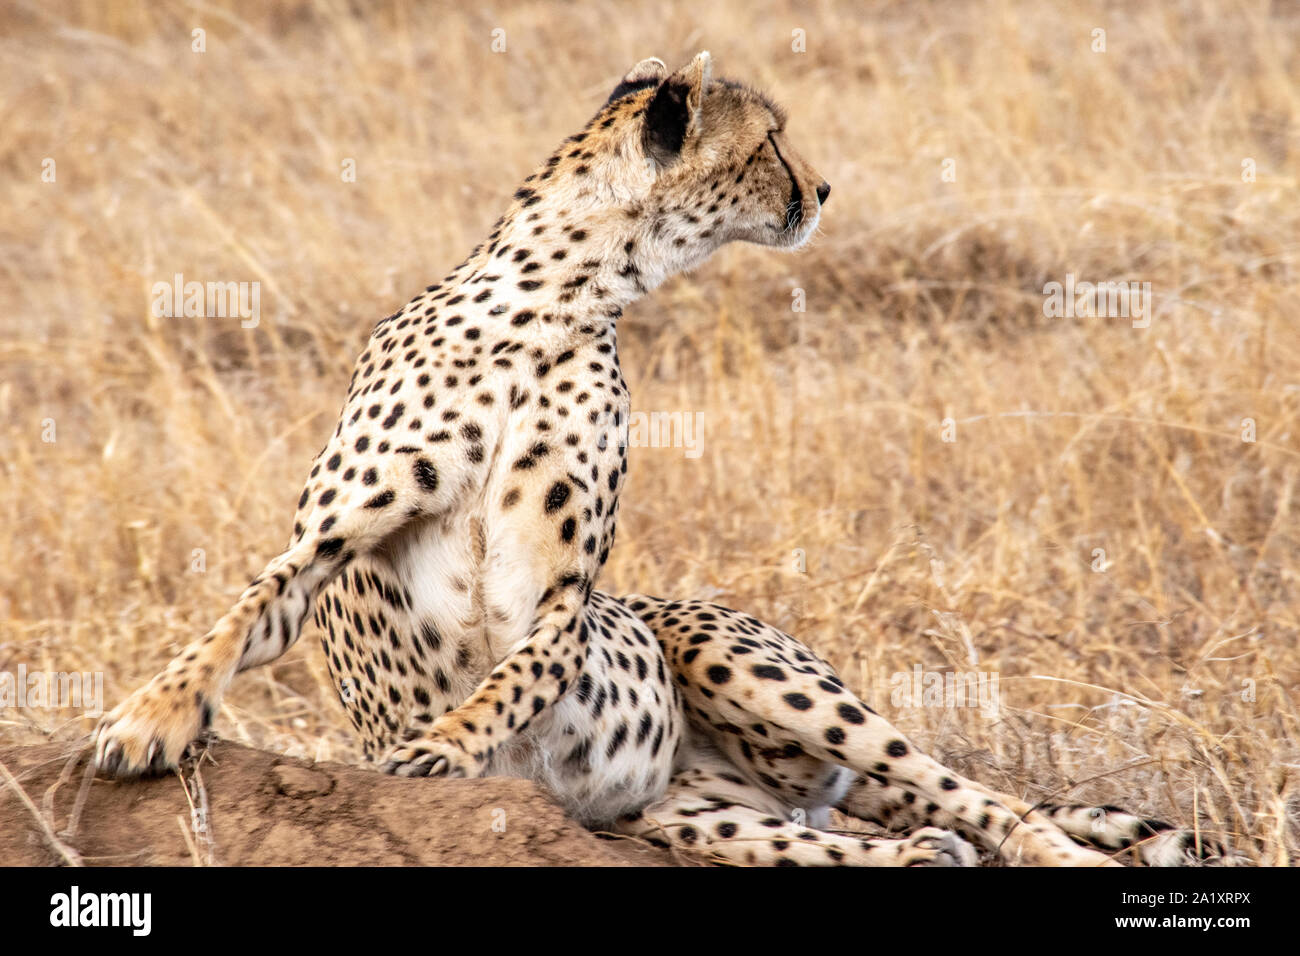 Cheetahs keep watch for prey and predators. Stock Photo